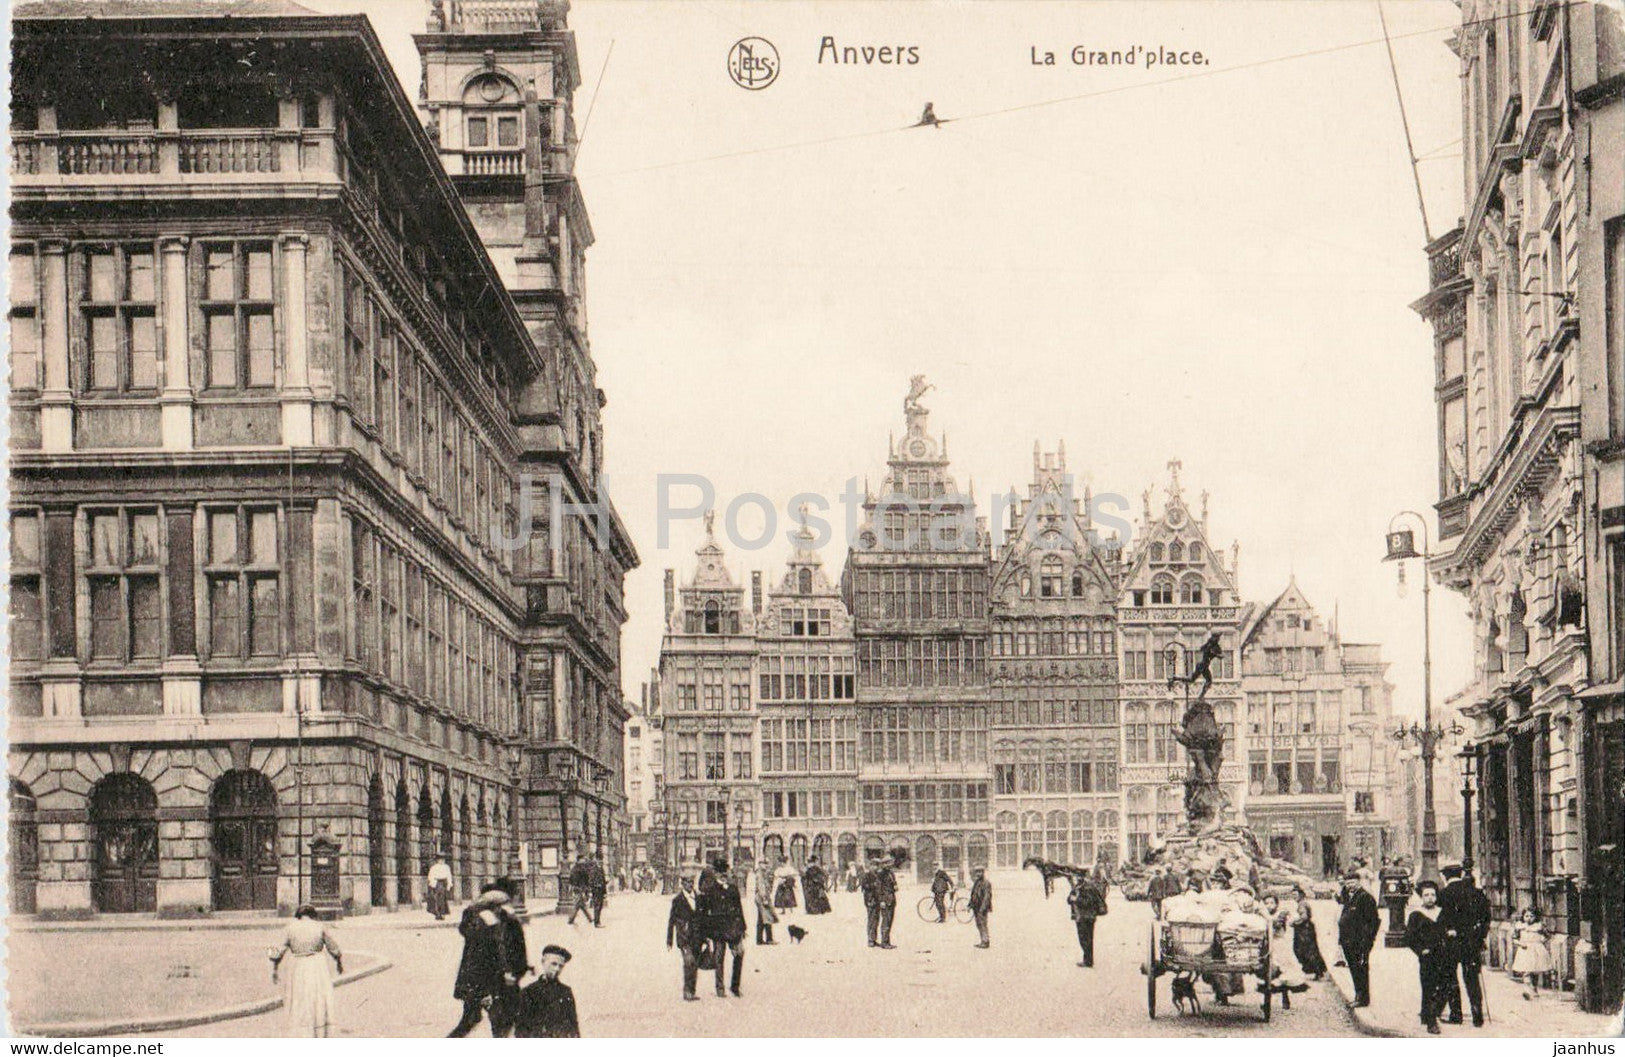 Anvers - Antwerpen - La Grand Place - old postcard - Belgium - unused - JH Postcards